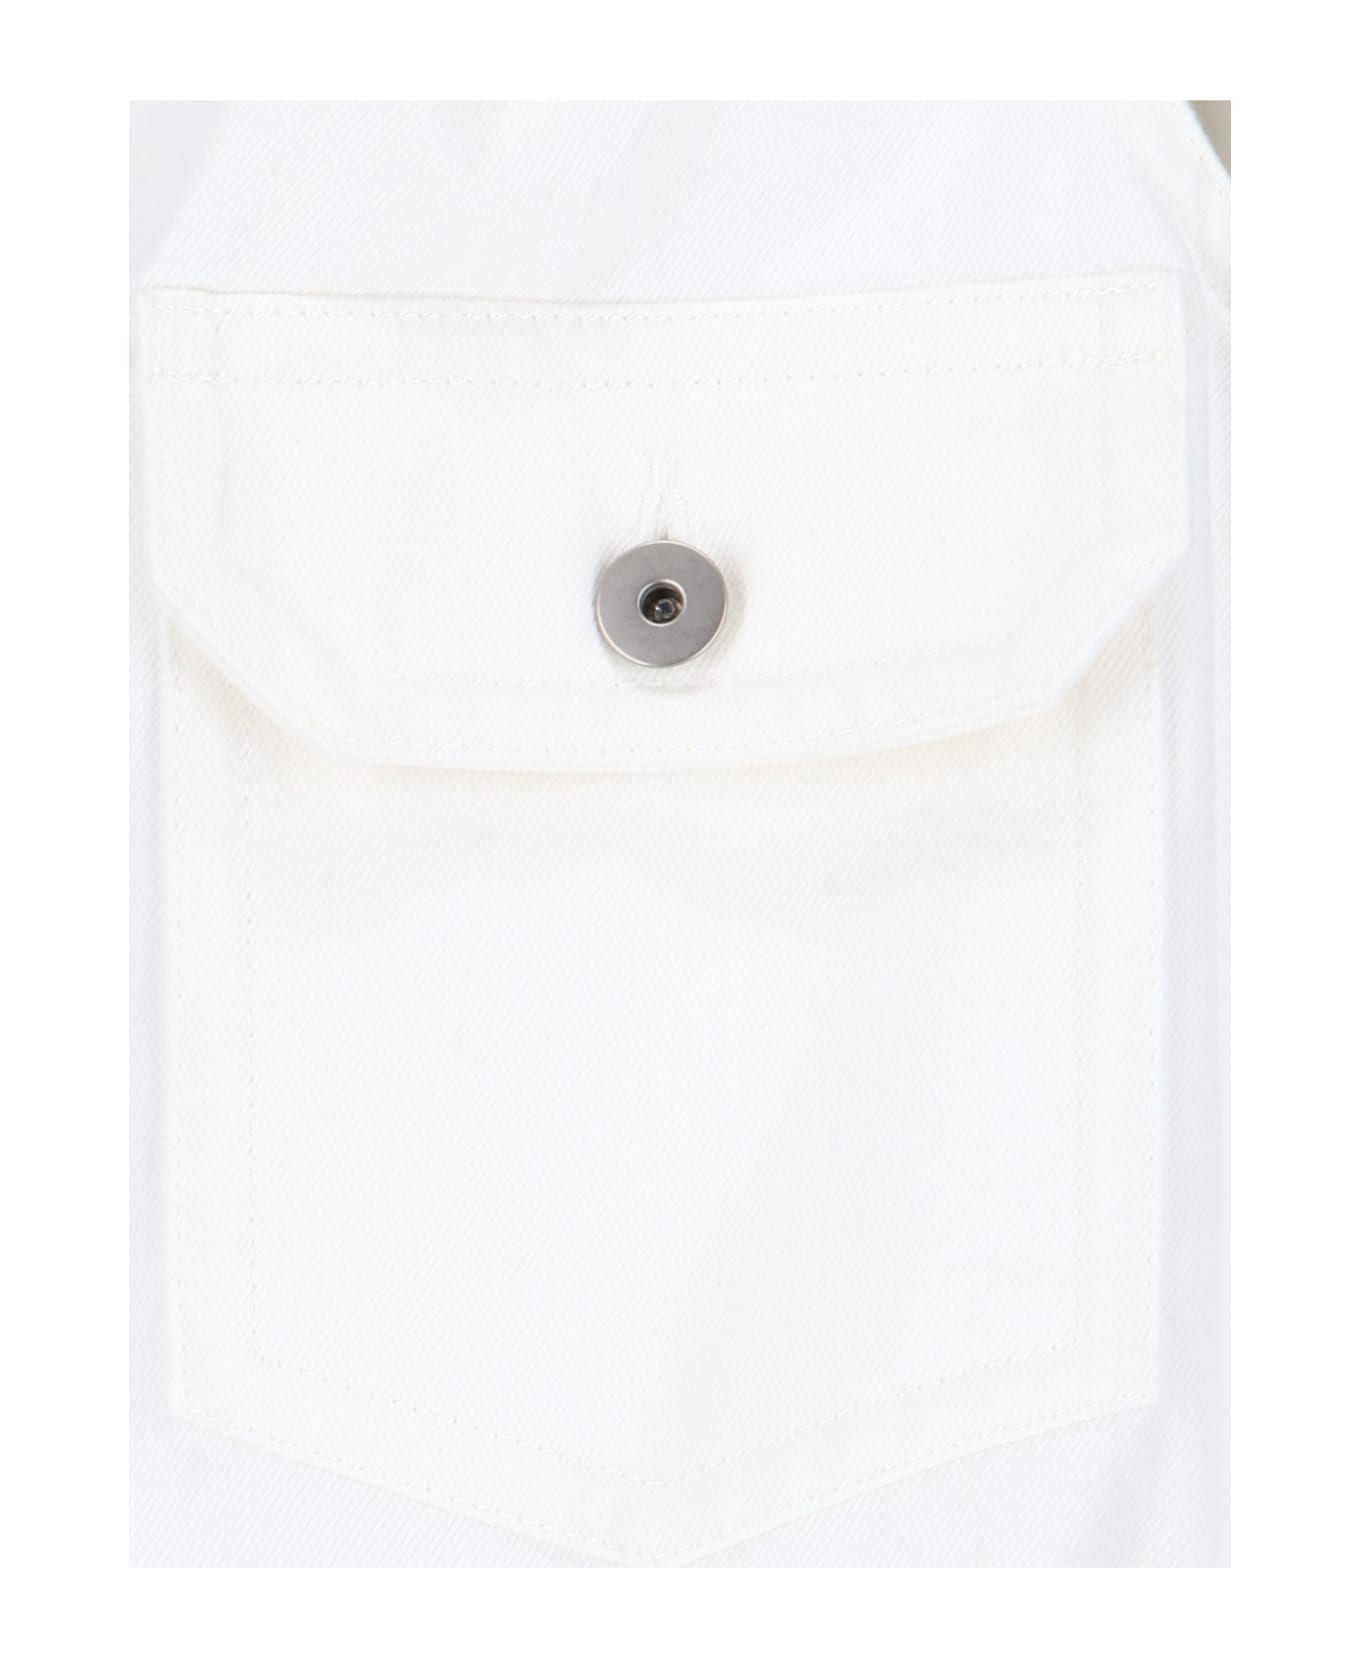 Sacai Sleeveless Shirt Jacket - White ベスト